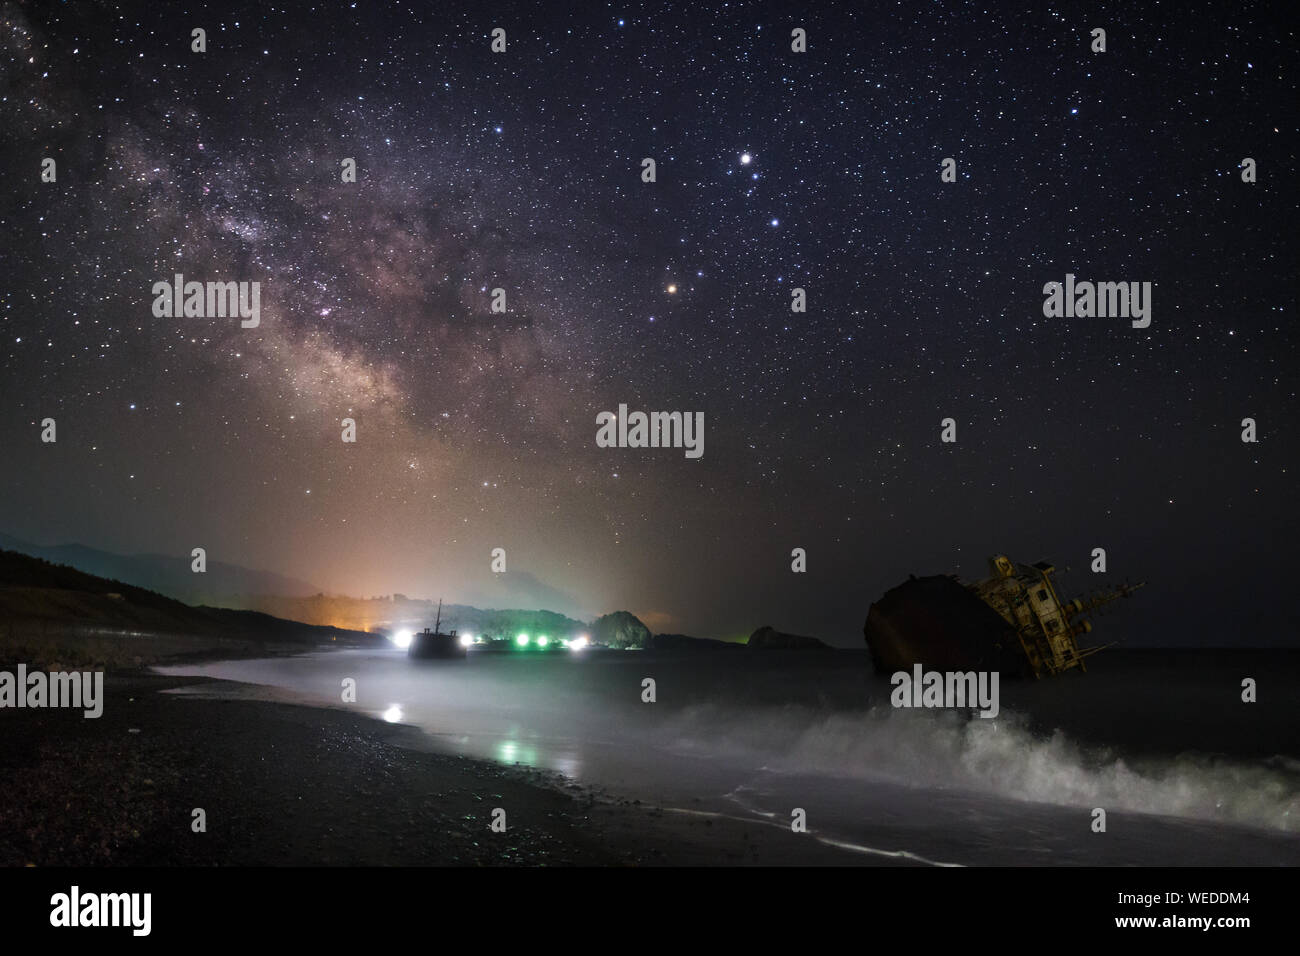 Bright Illuminated Milky Way And Constellations At Night Stock Photo